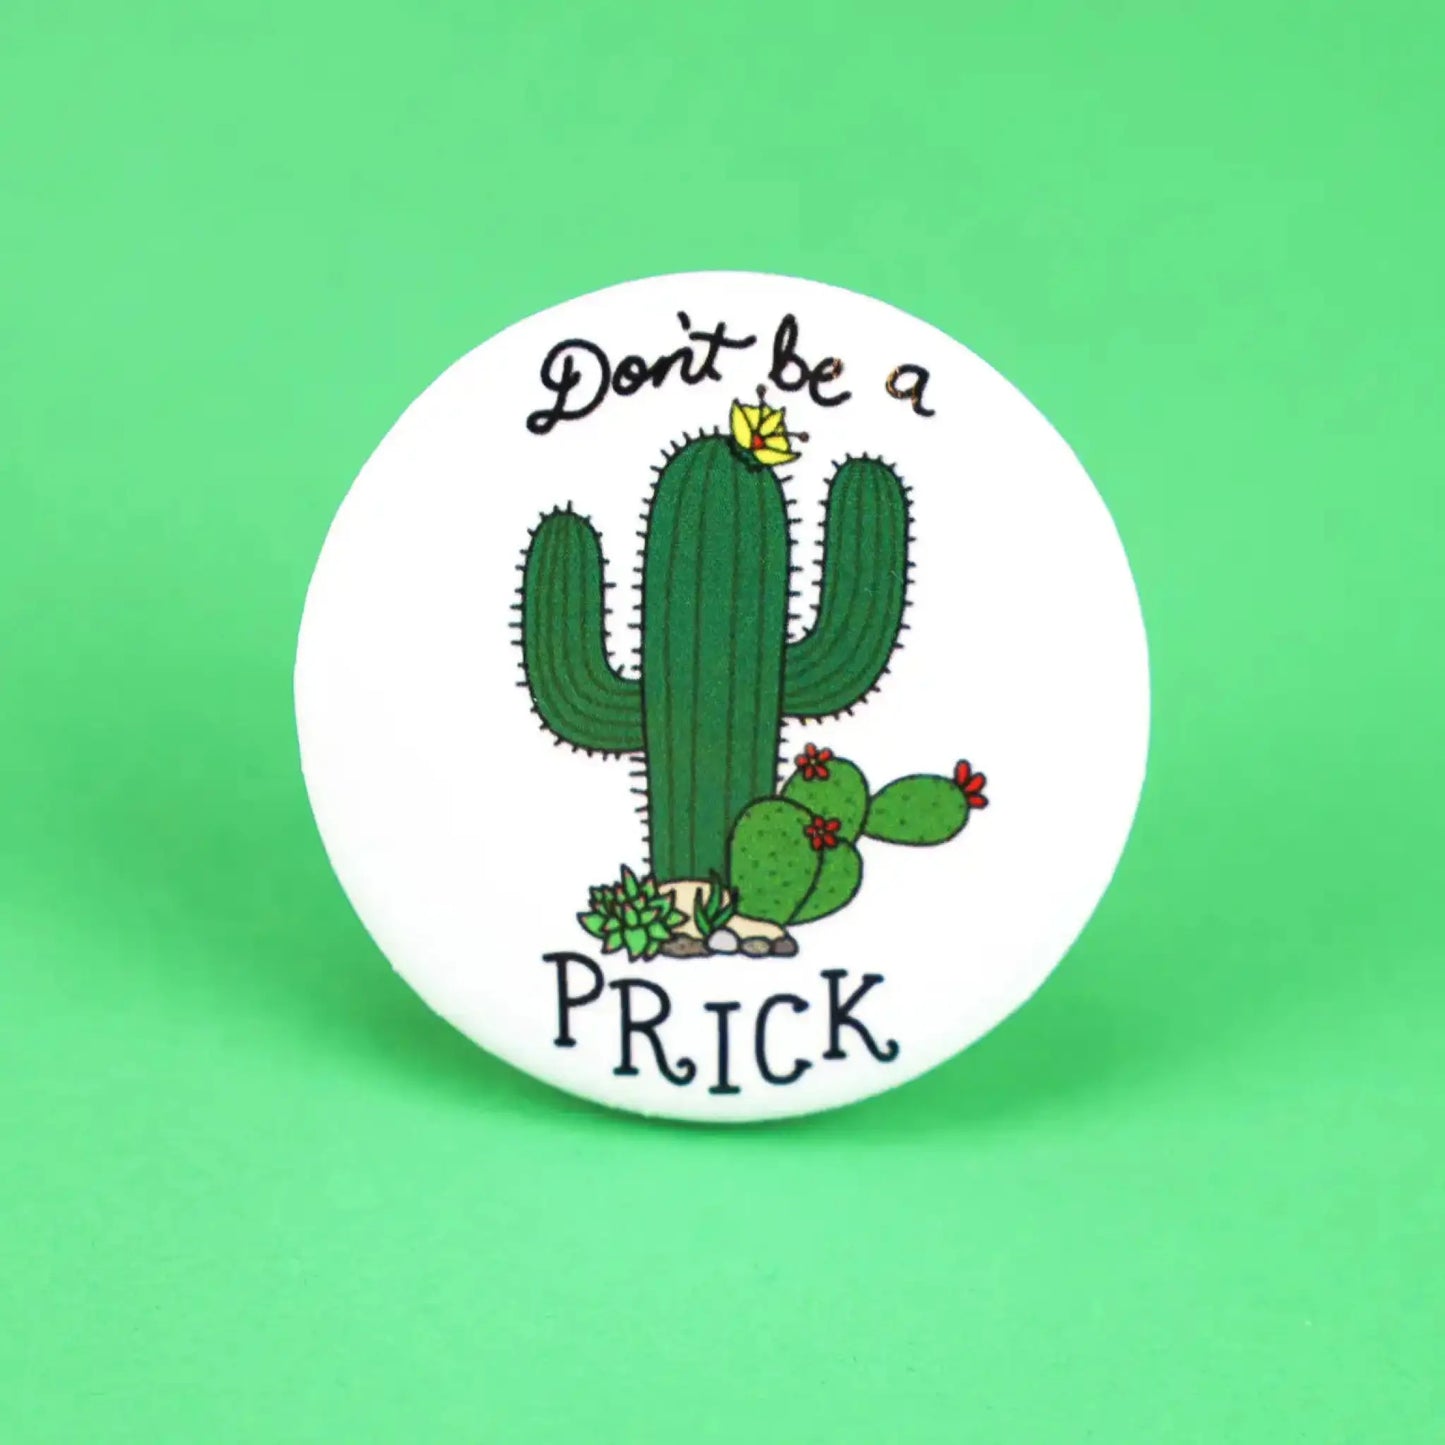 Don’t be a Prick Cactus pinback button - Button